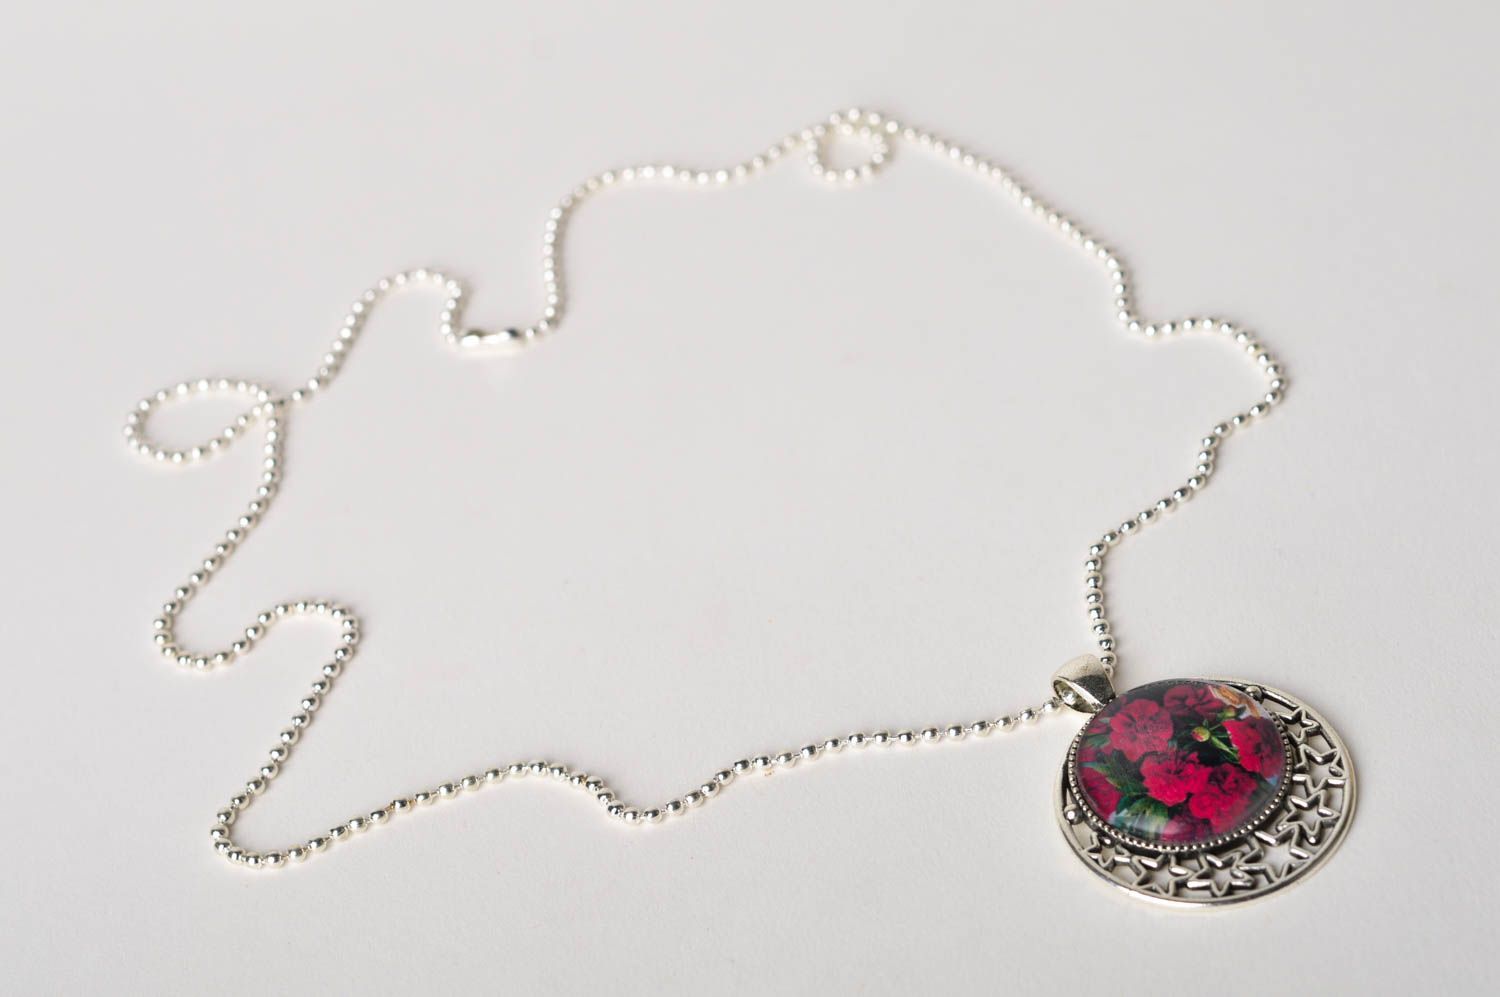 Handmade pendant with delicate print pendant on long chain designer jewelry photo 5